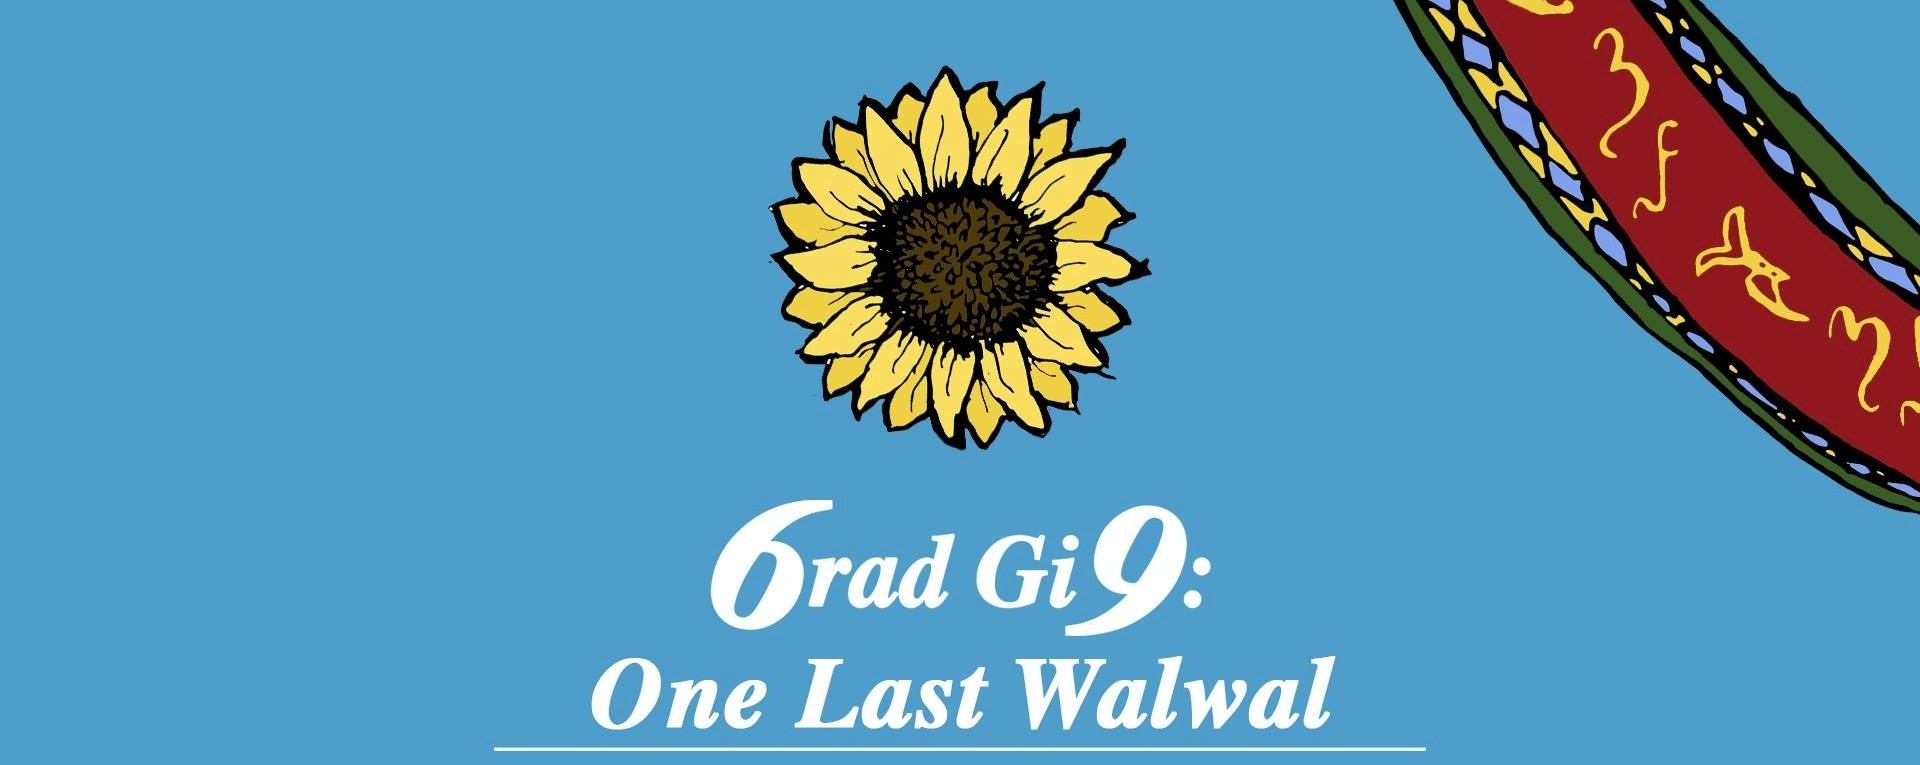 6rad gi9: One Last Walwal